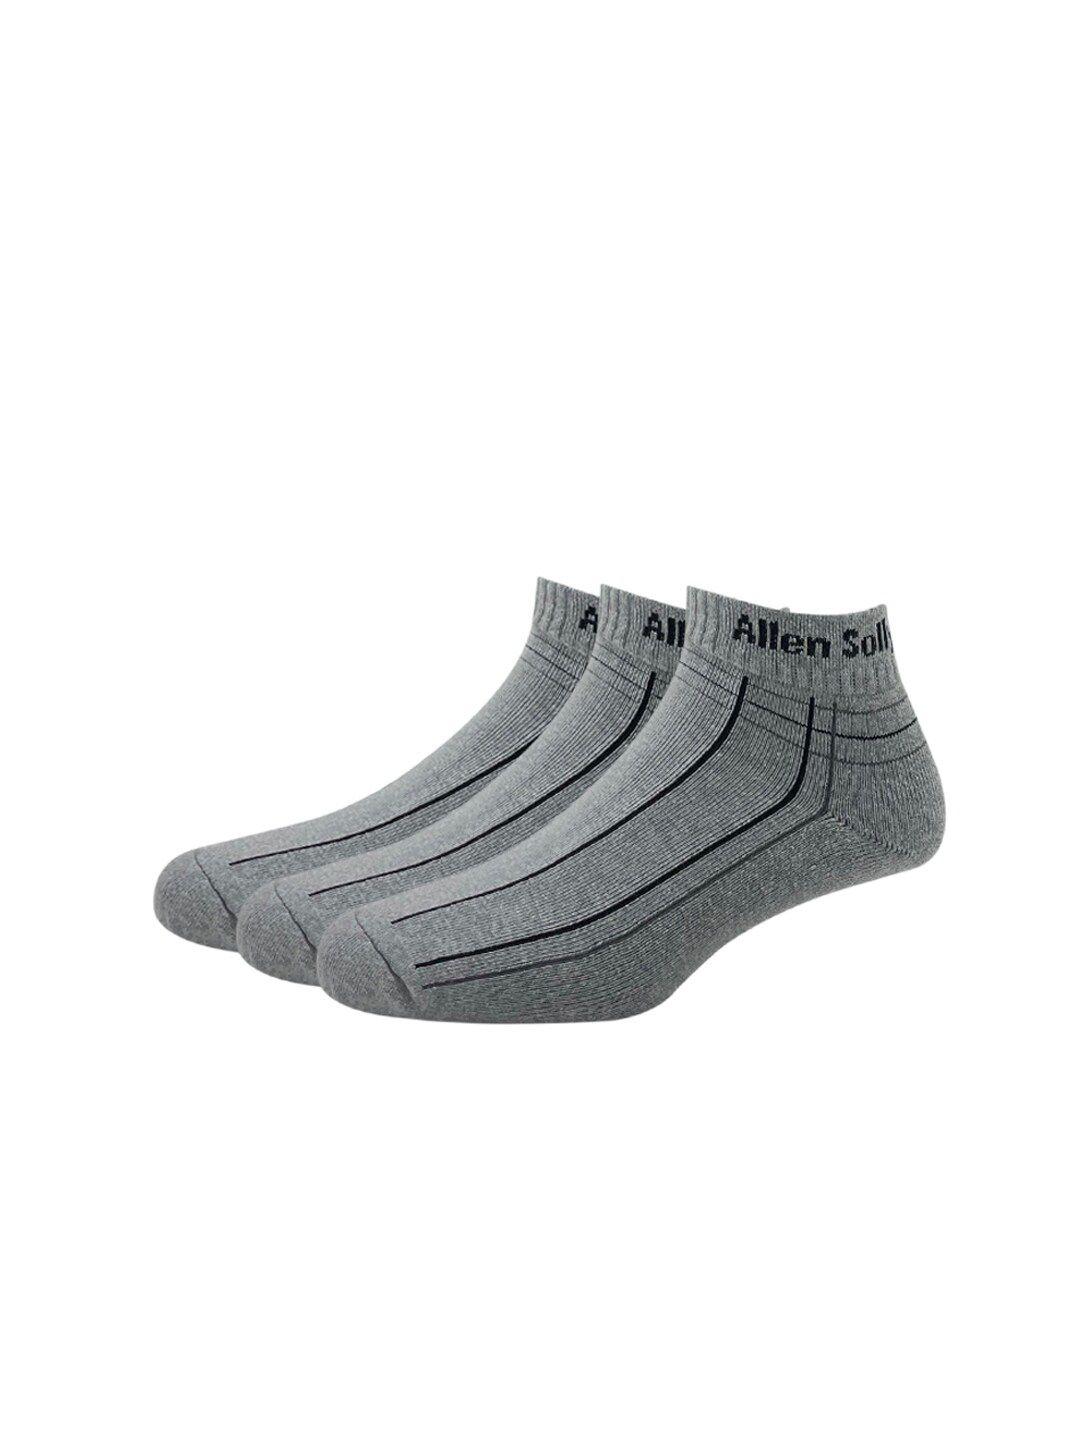 allen-solly-men-pack-of-3-patterned-ankle-length-socks